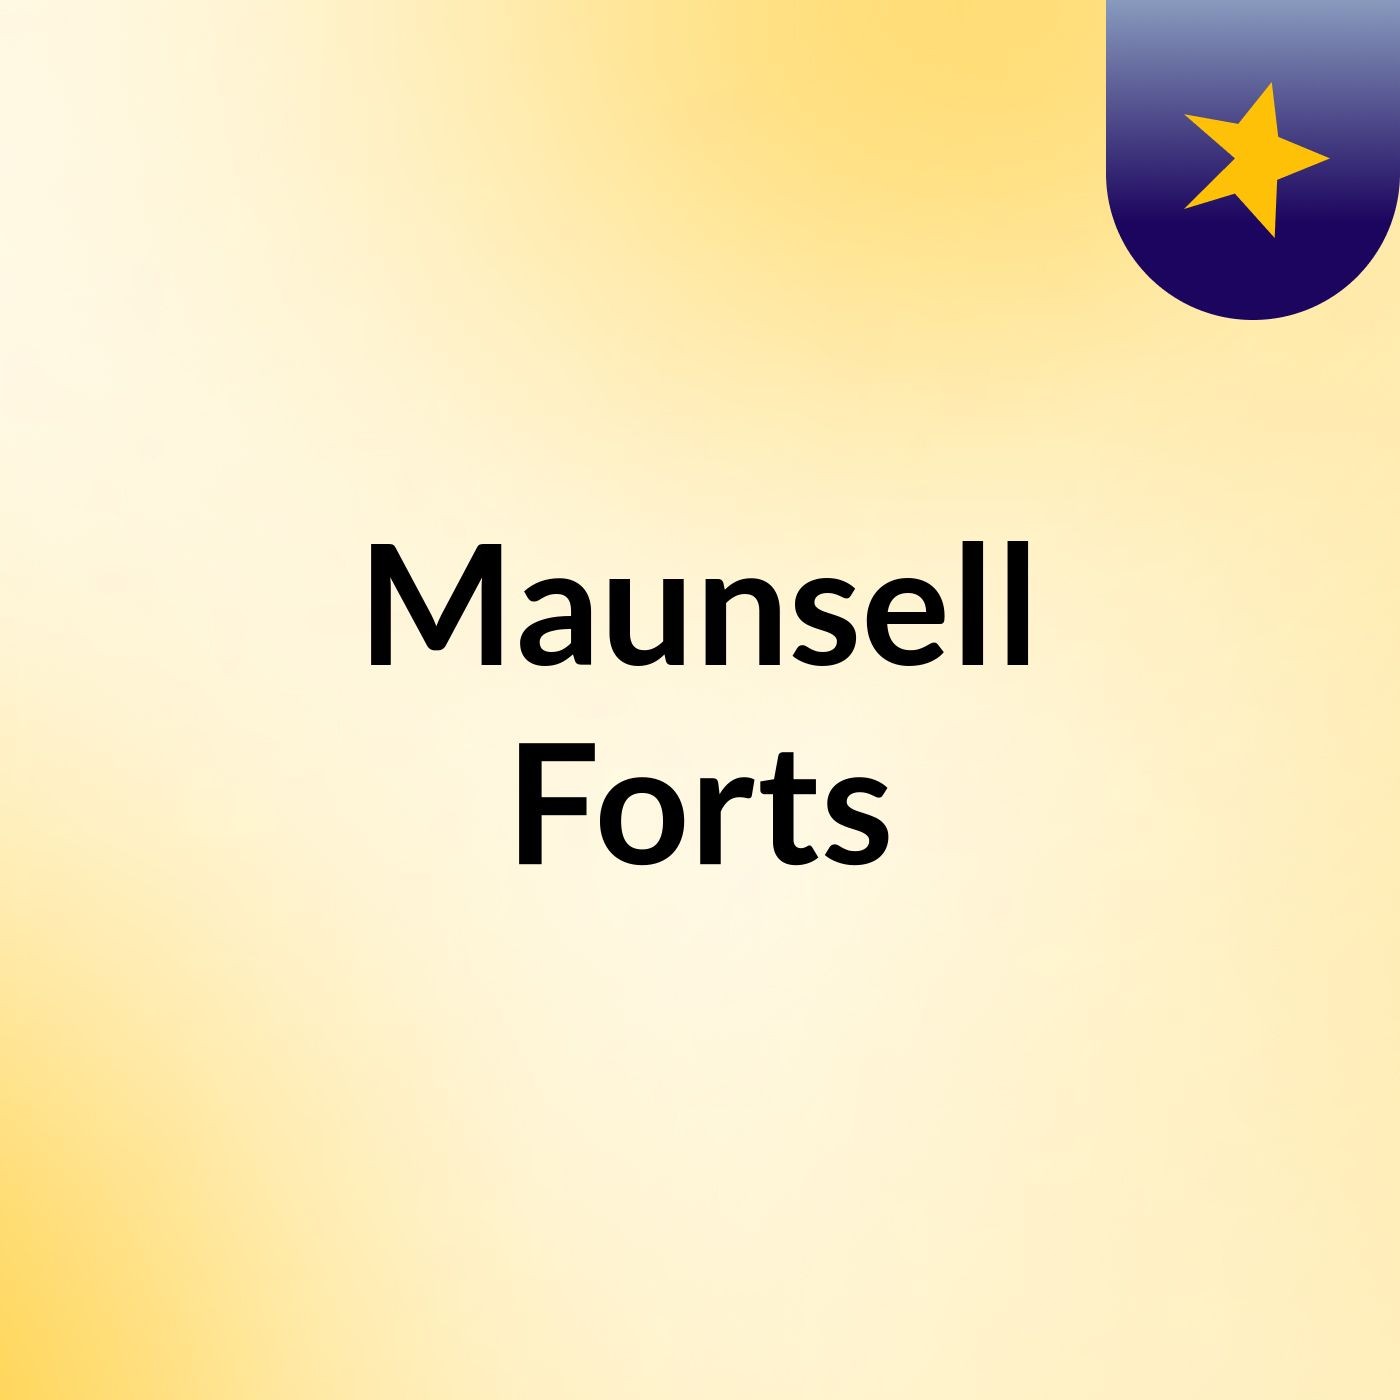 Maunsell Forts